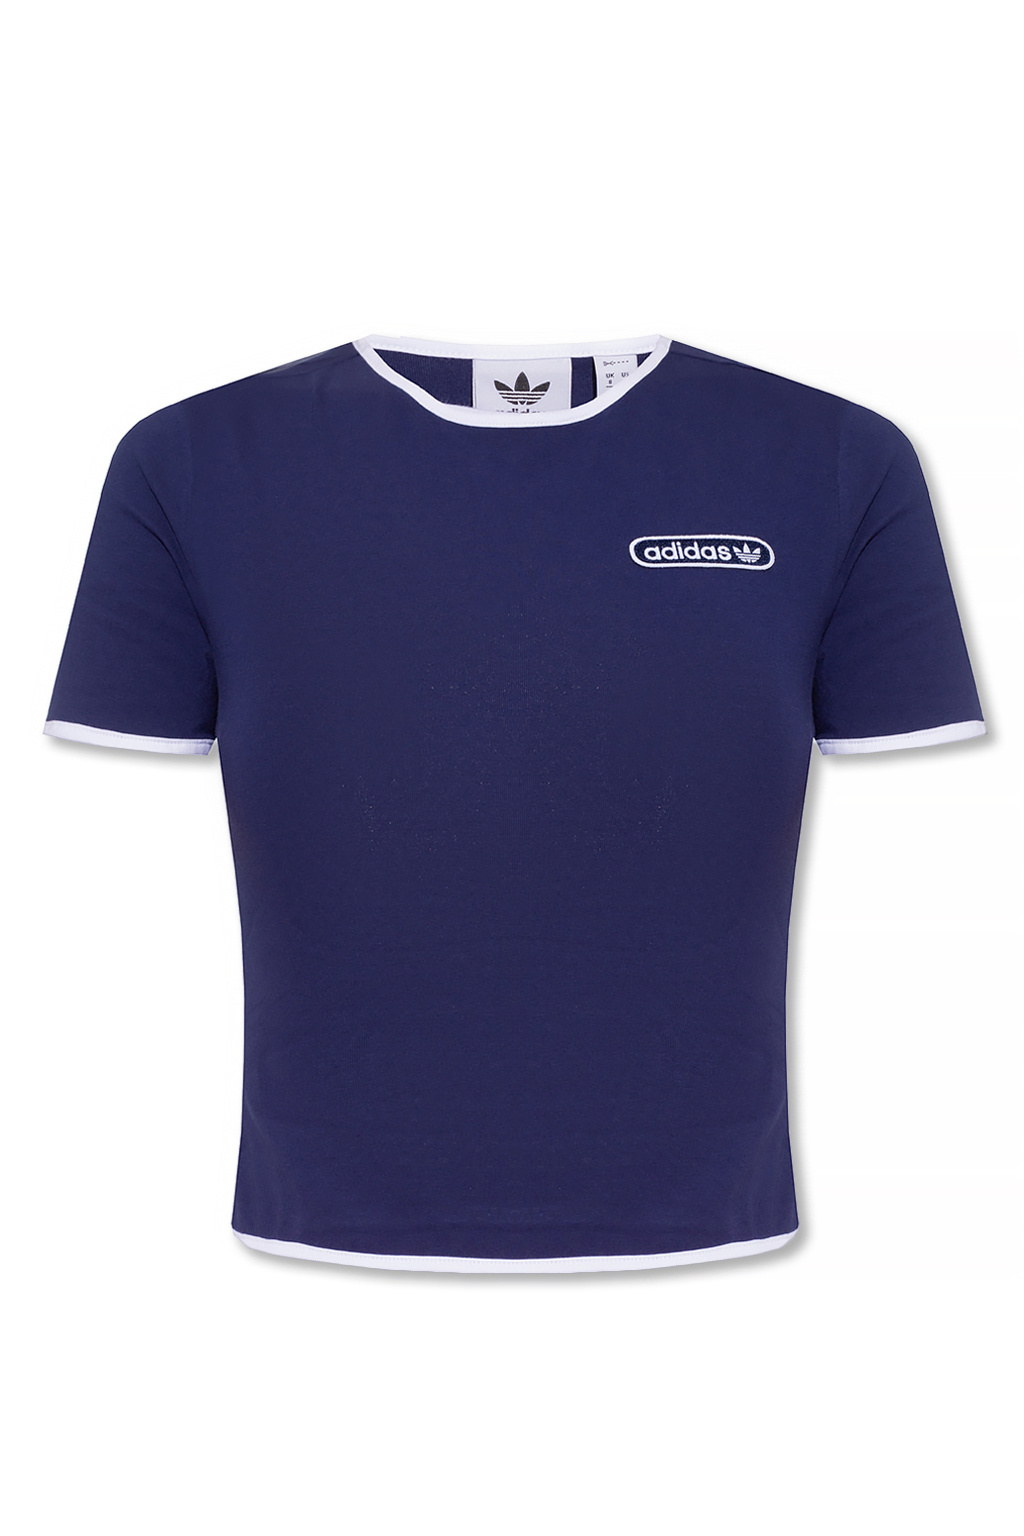 Navy blue Logo T - IetpShops Australia - adidas 3 Stripe Entraînement  Tights Junior Filles - shirt ADIDAS Originals